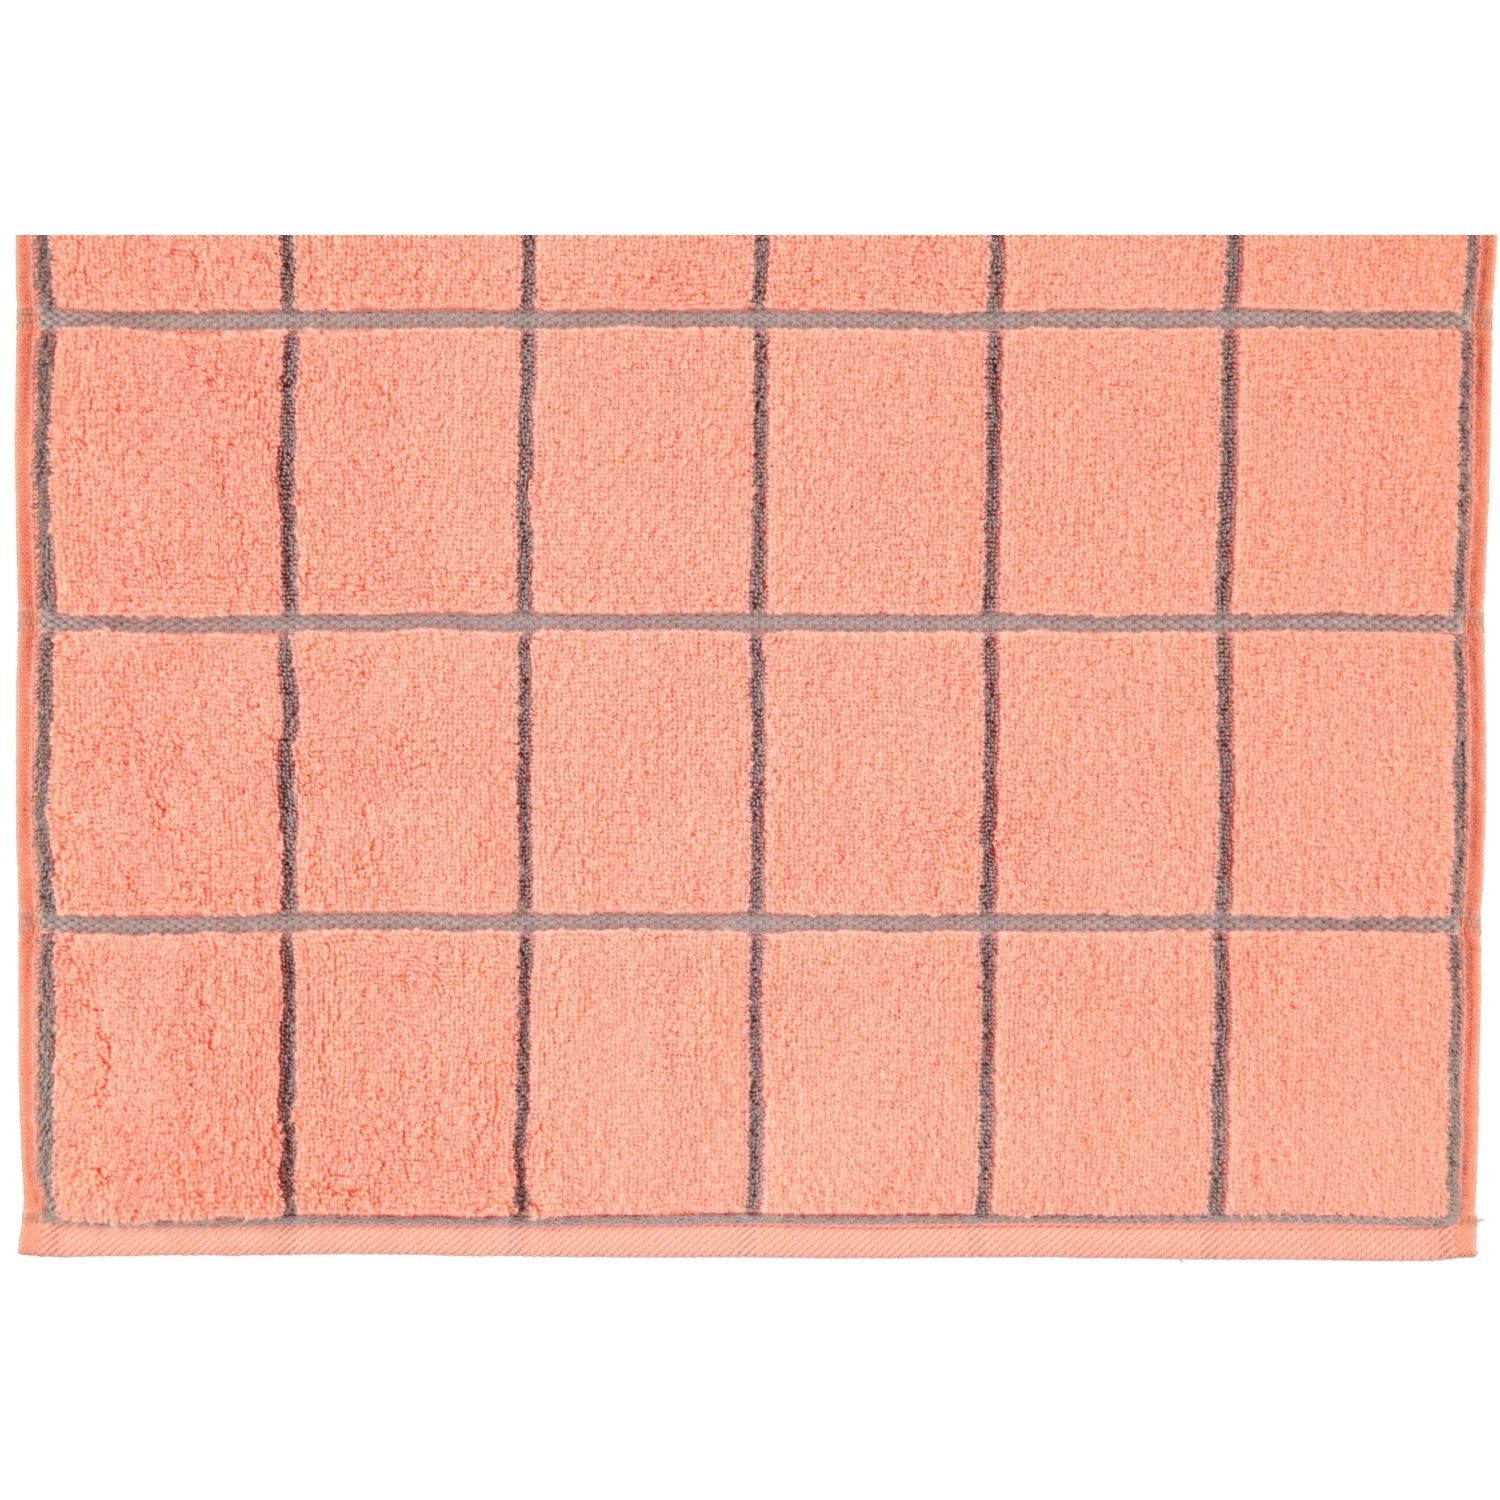 ROSS Handtücher Überkaro 9032, pink peach Baumwolle 100